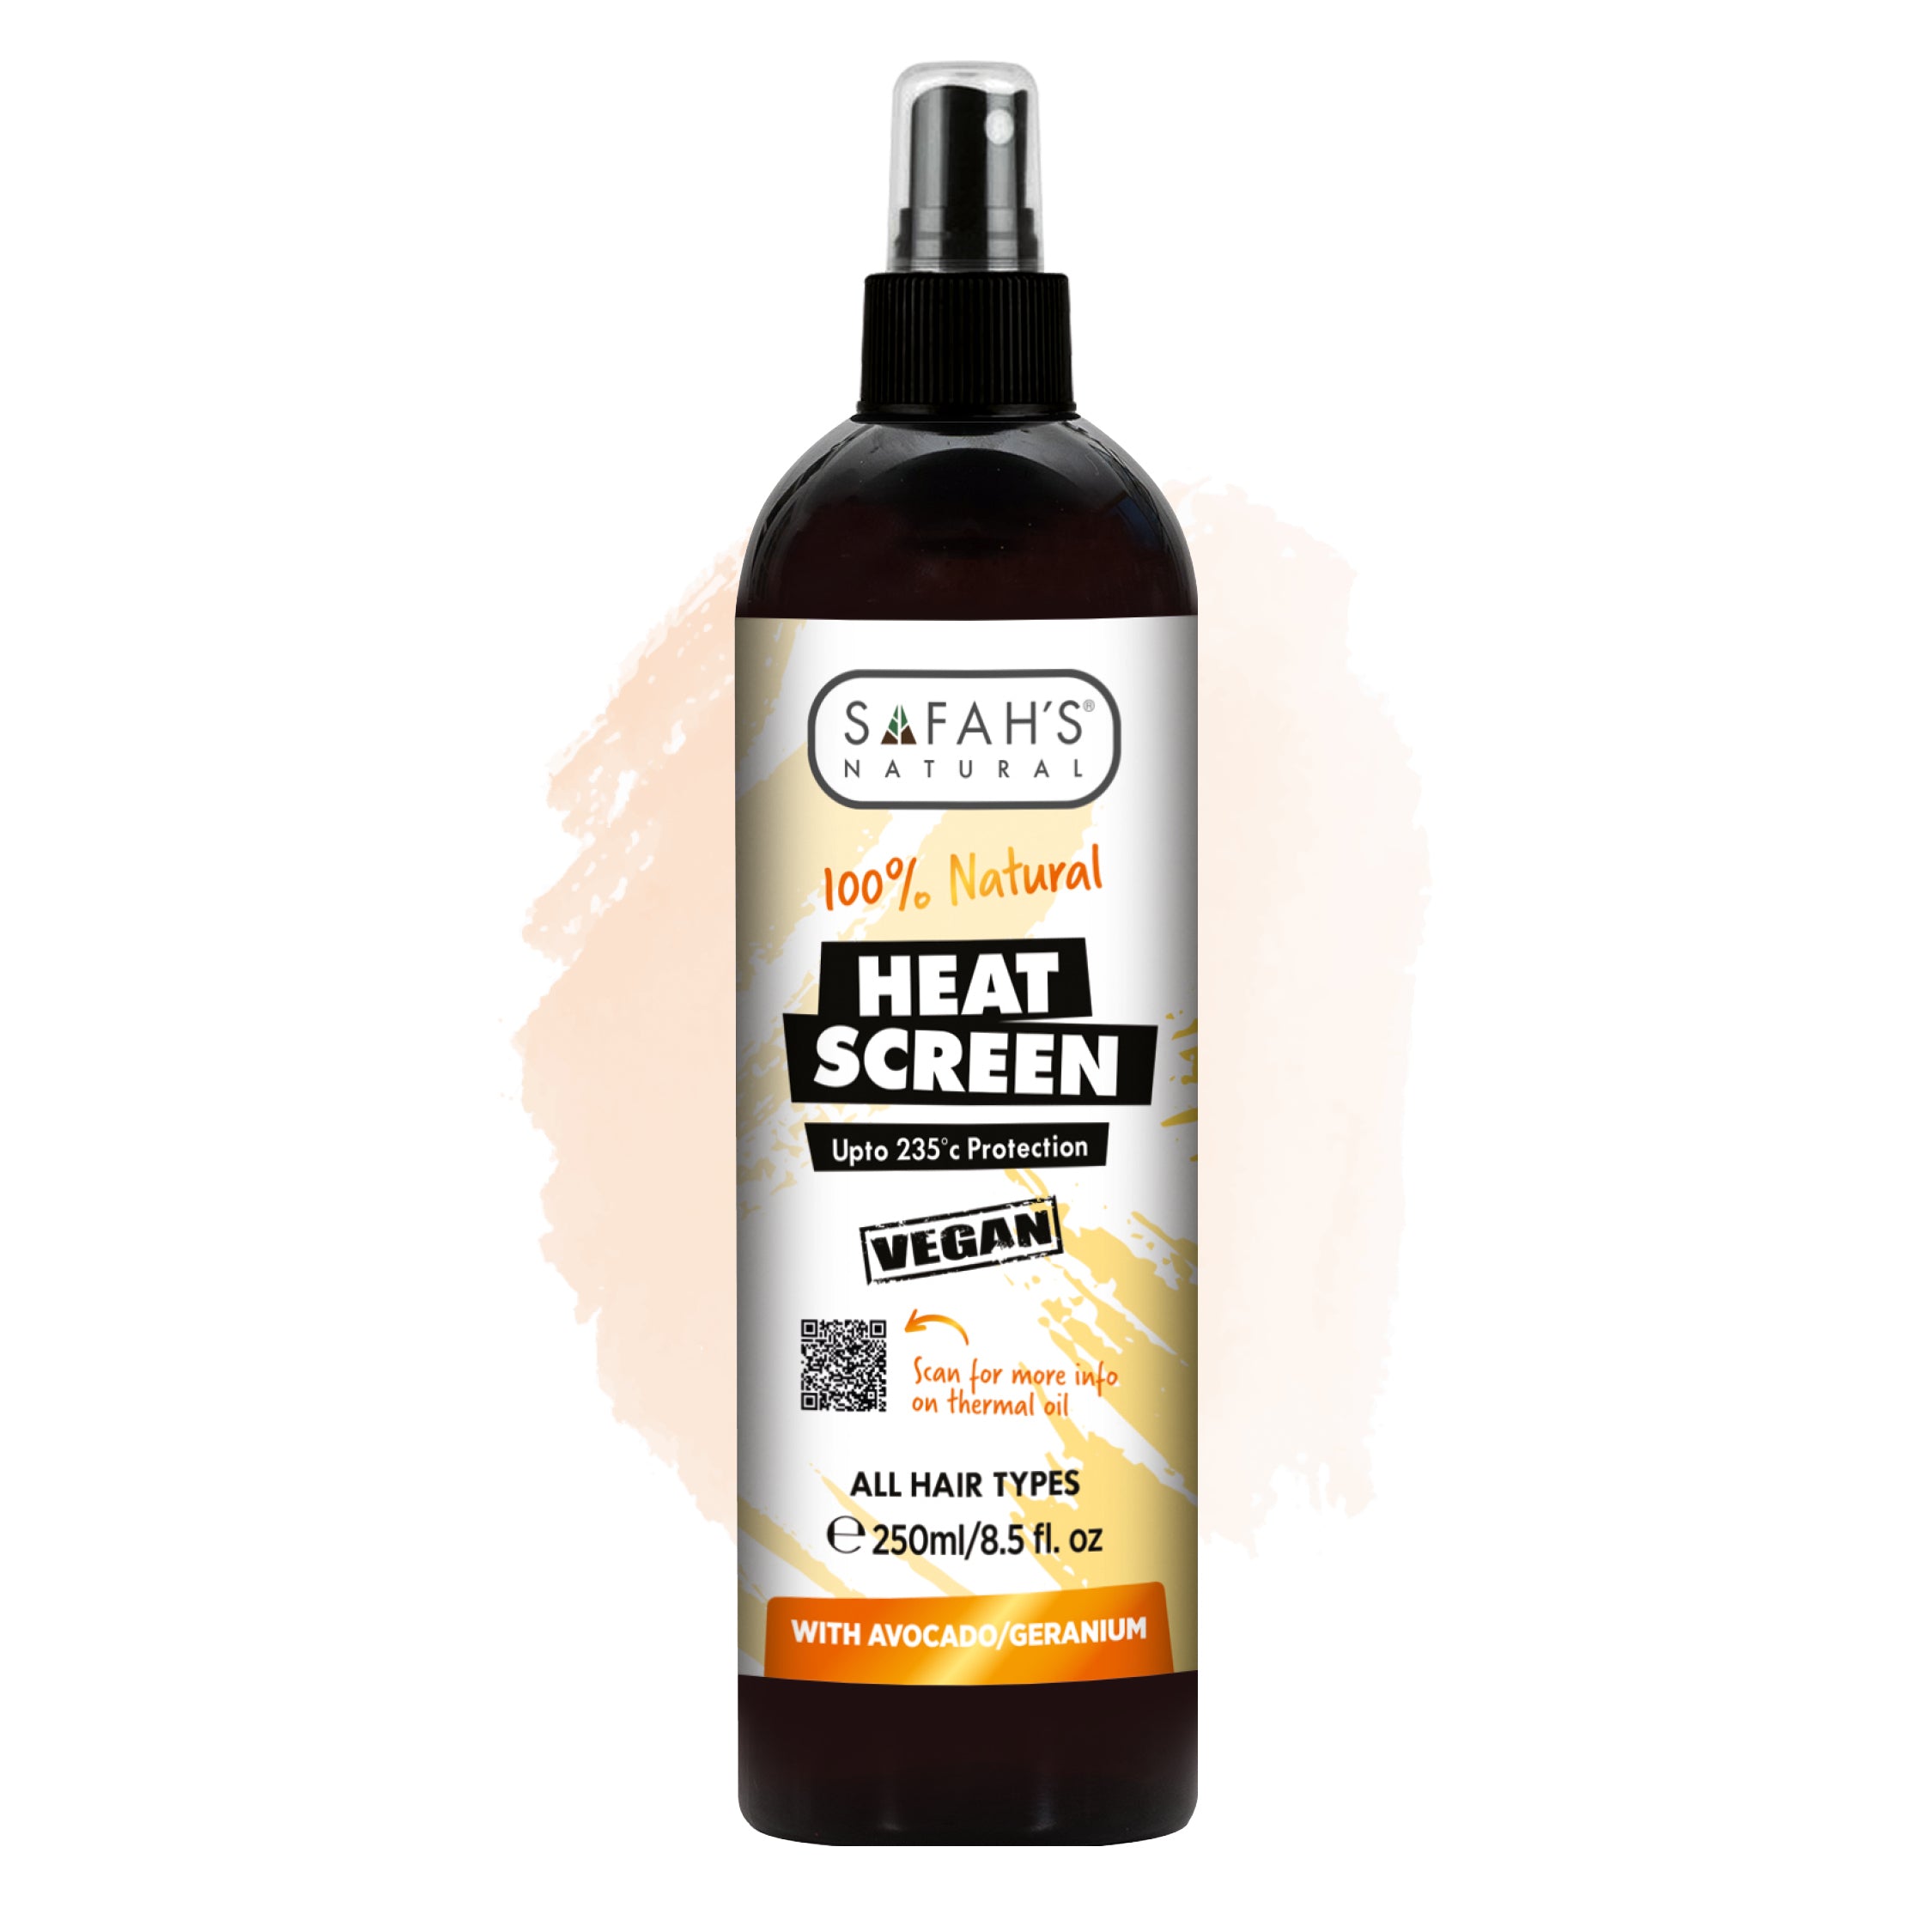 Heat Screen (Heat protector spray)